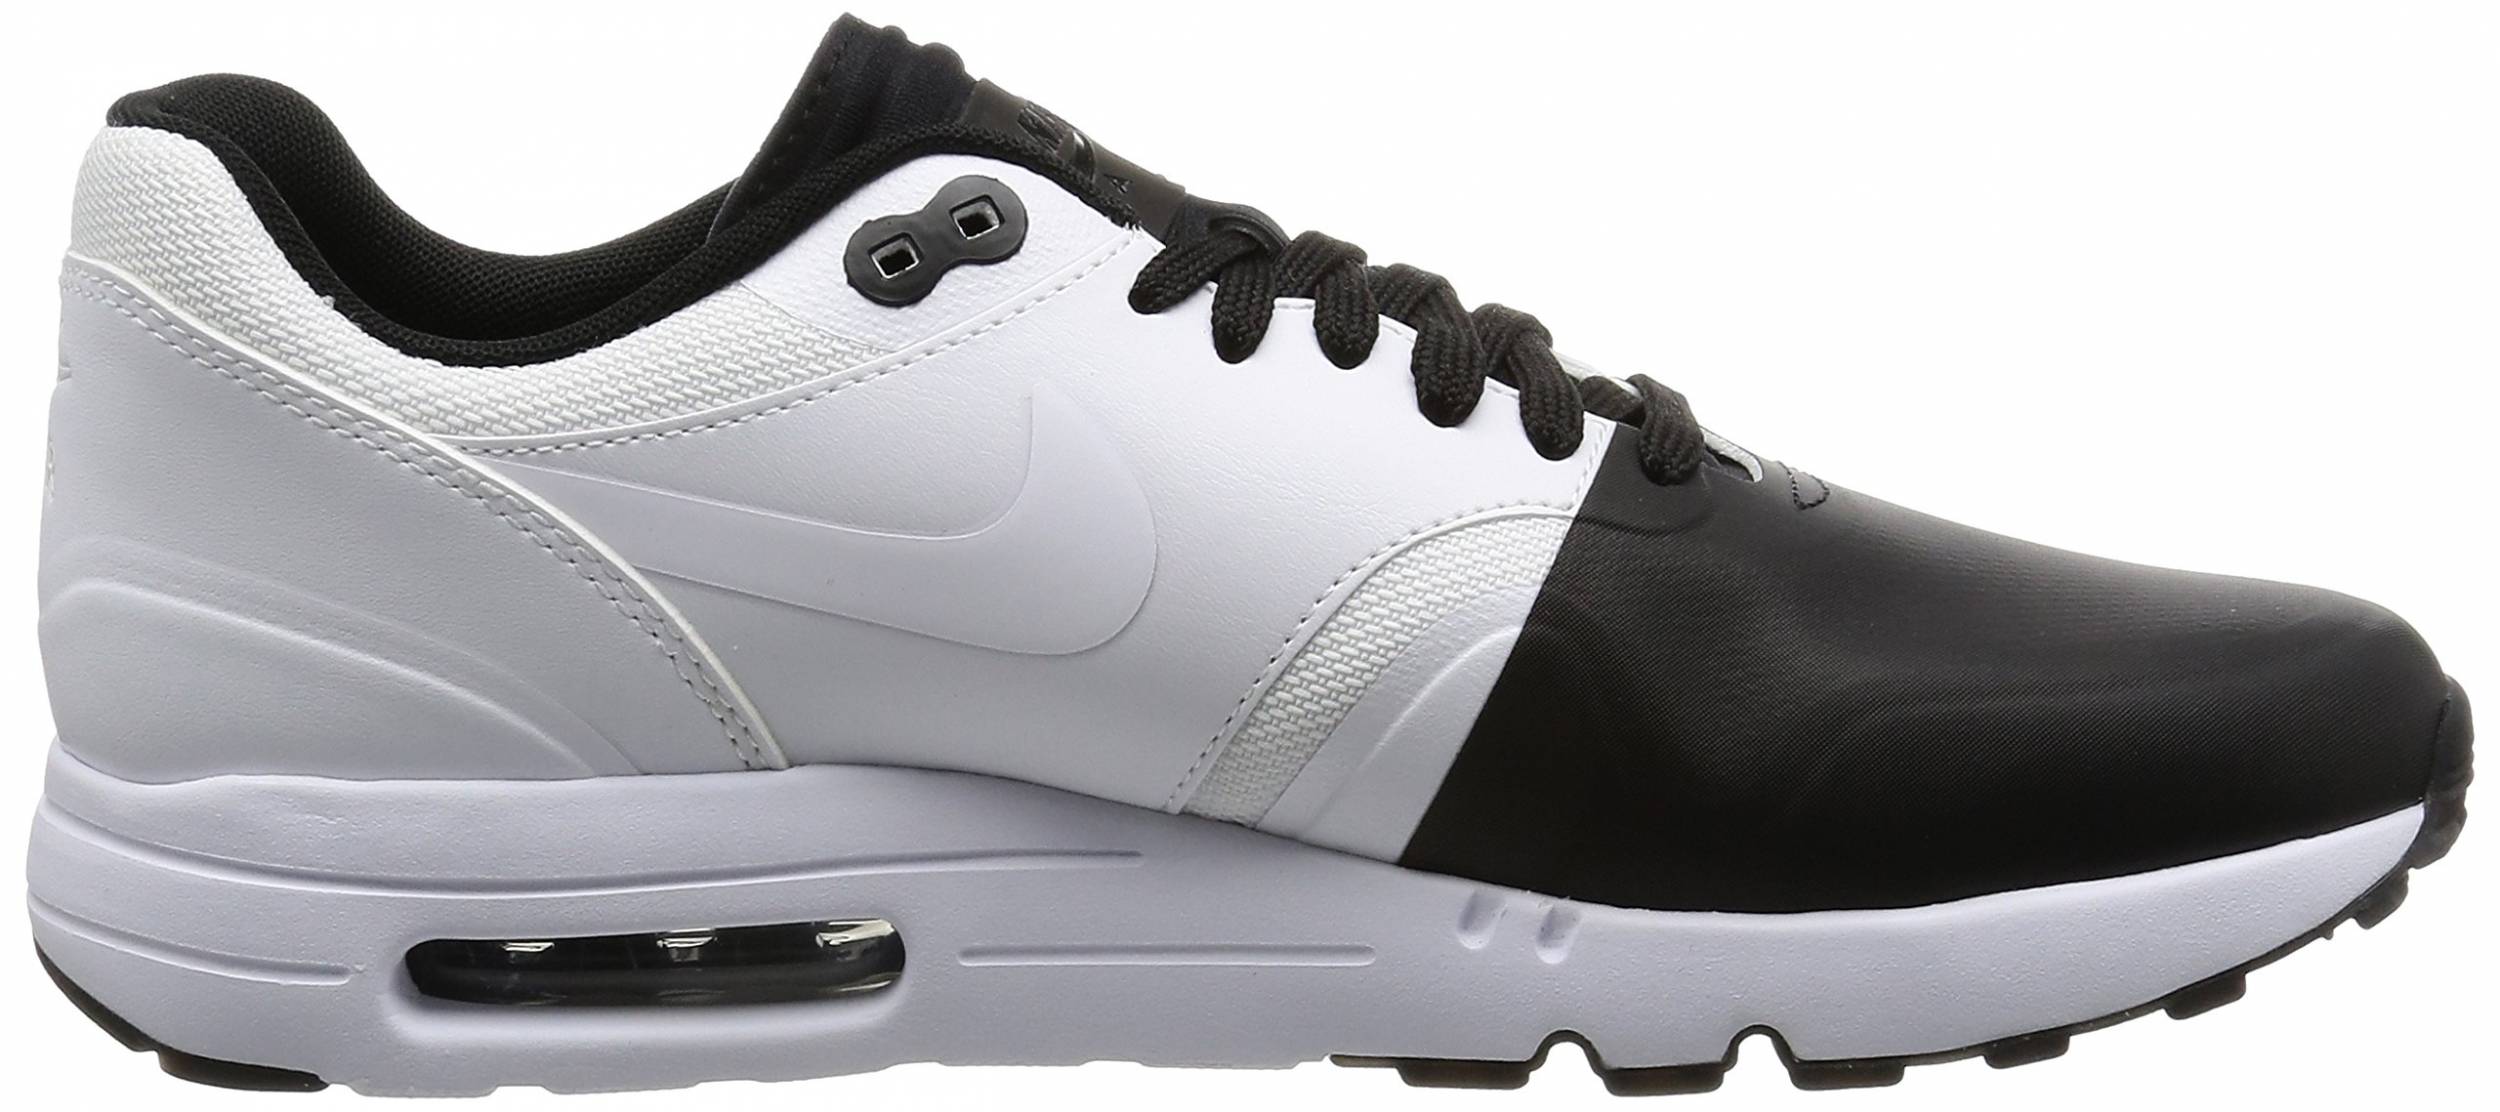 Nike Air Max 1 Ultra 2.0 SE sneakers in grey (only $105) | RunRepeat